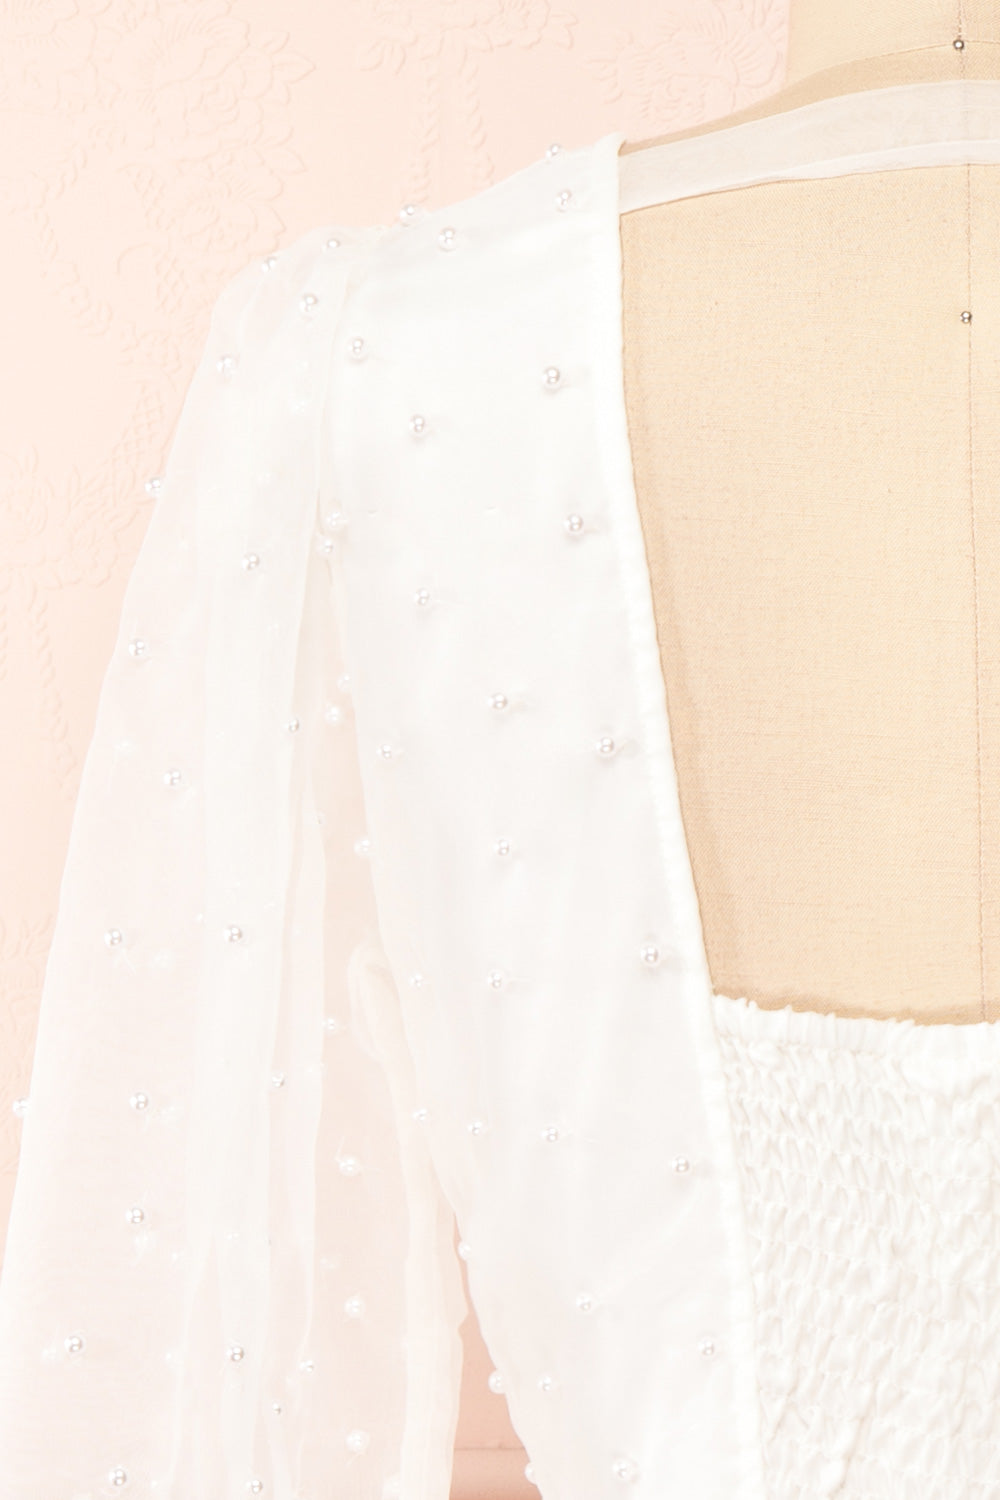 Darlene Short White A-Line Dress w/ Pearls | Boutique 1861 back close-up